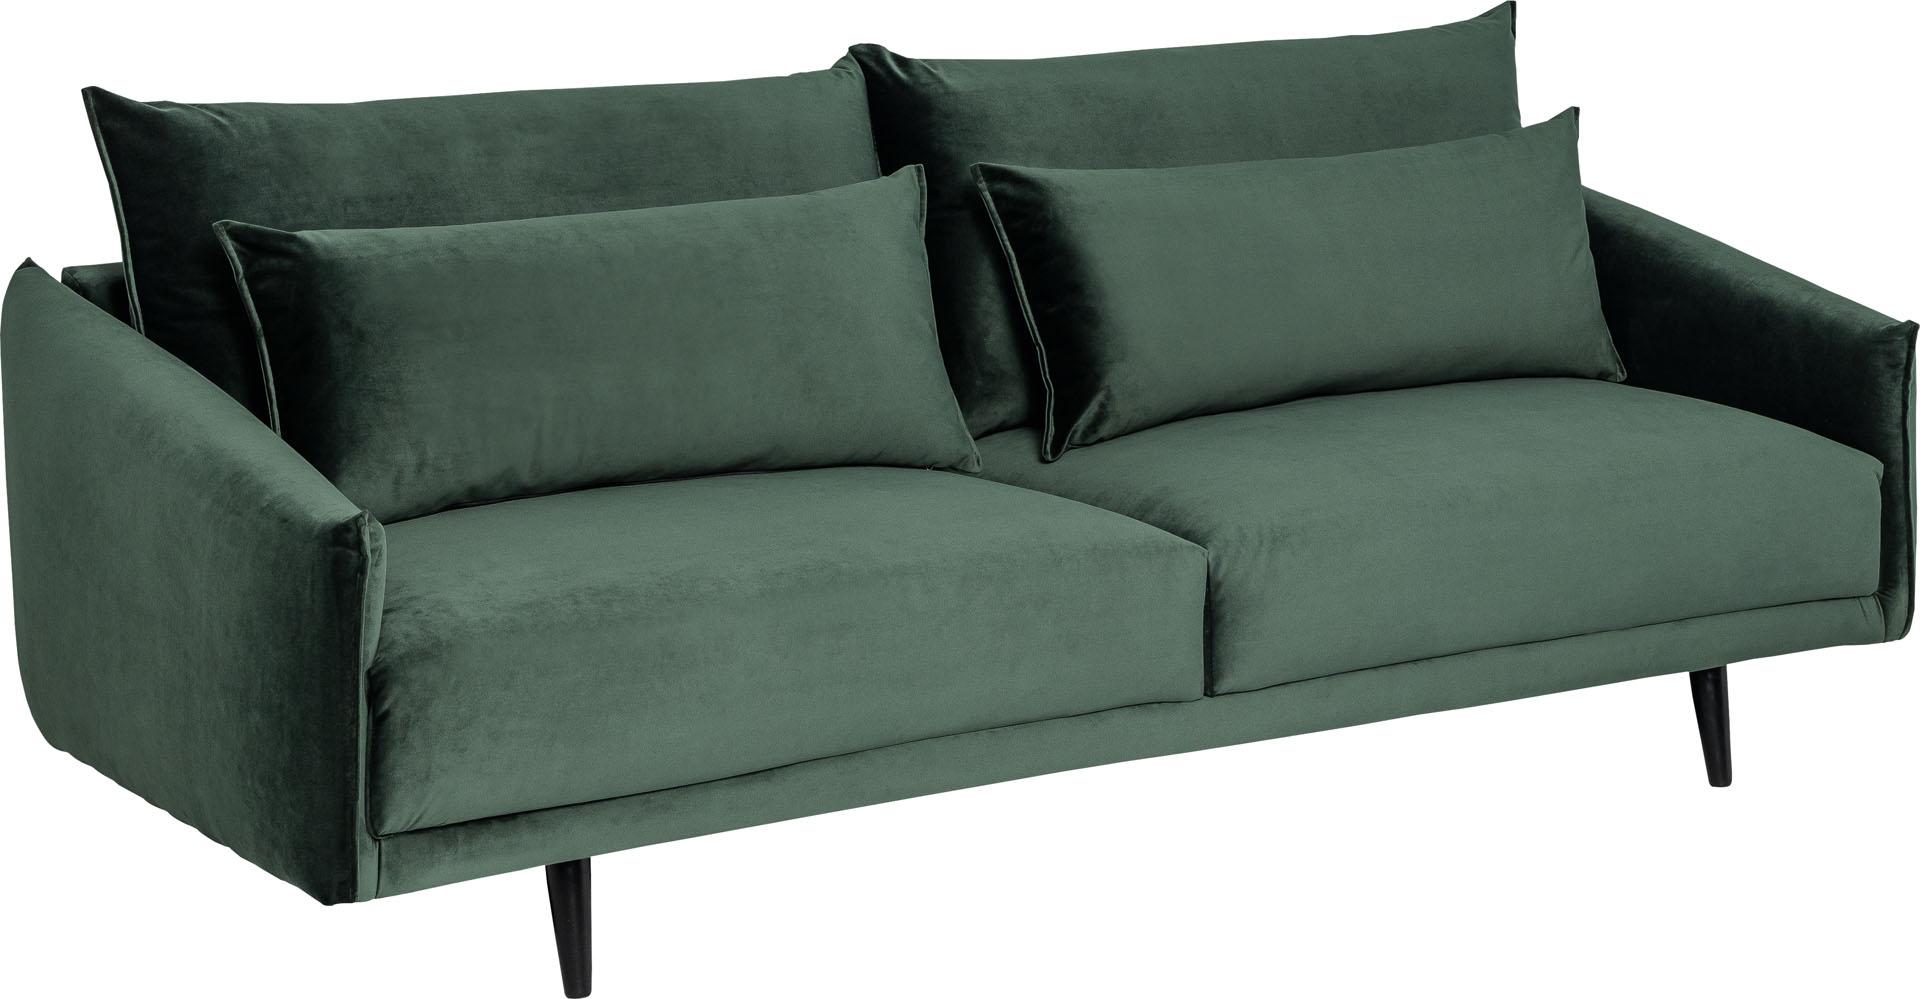 3-seat sofa Duvet